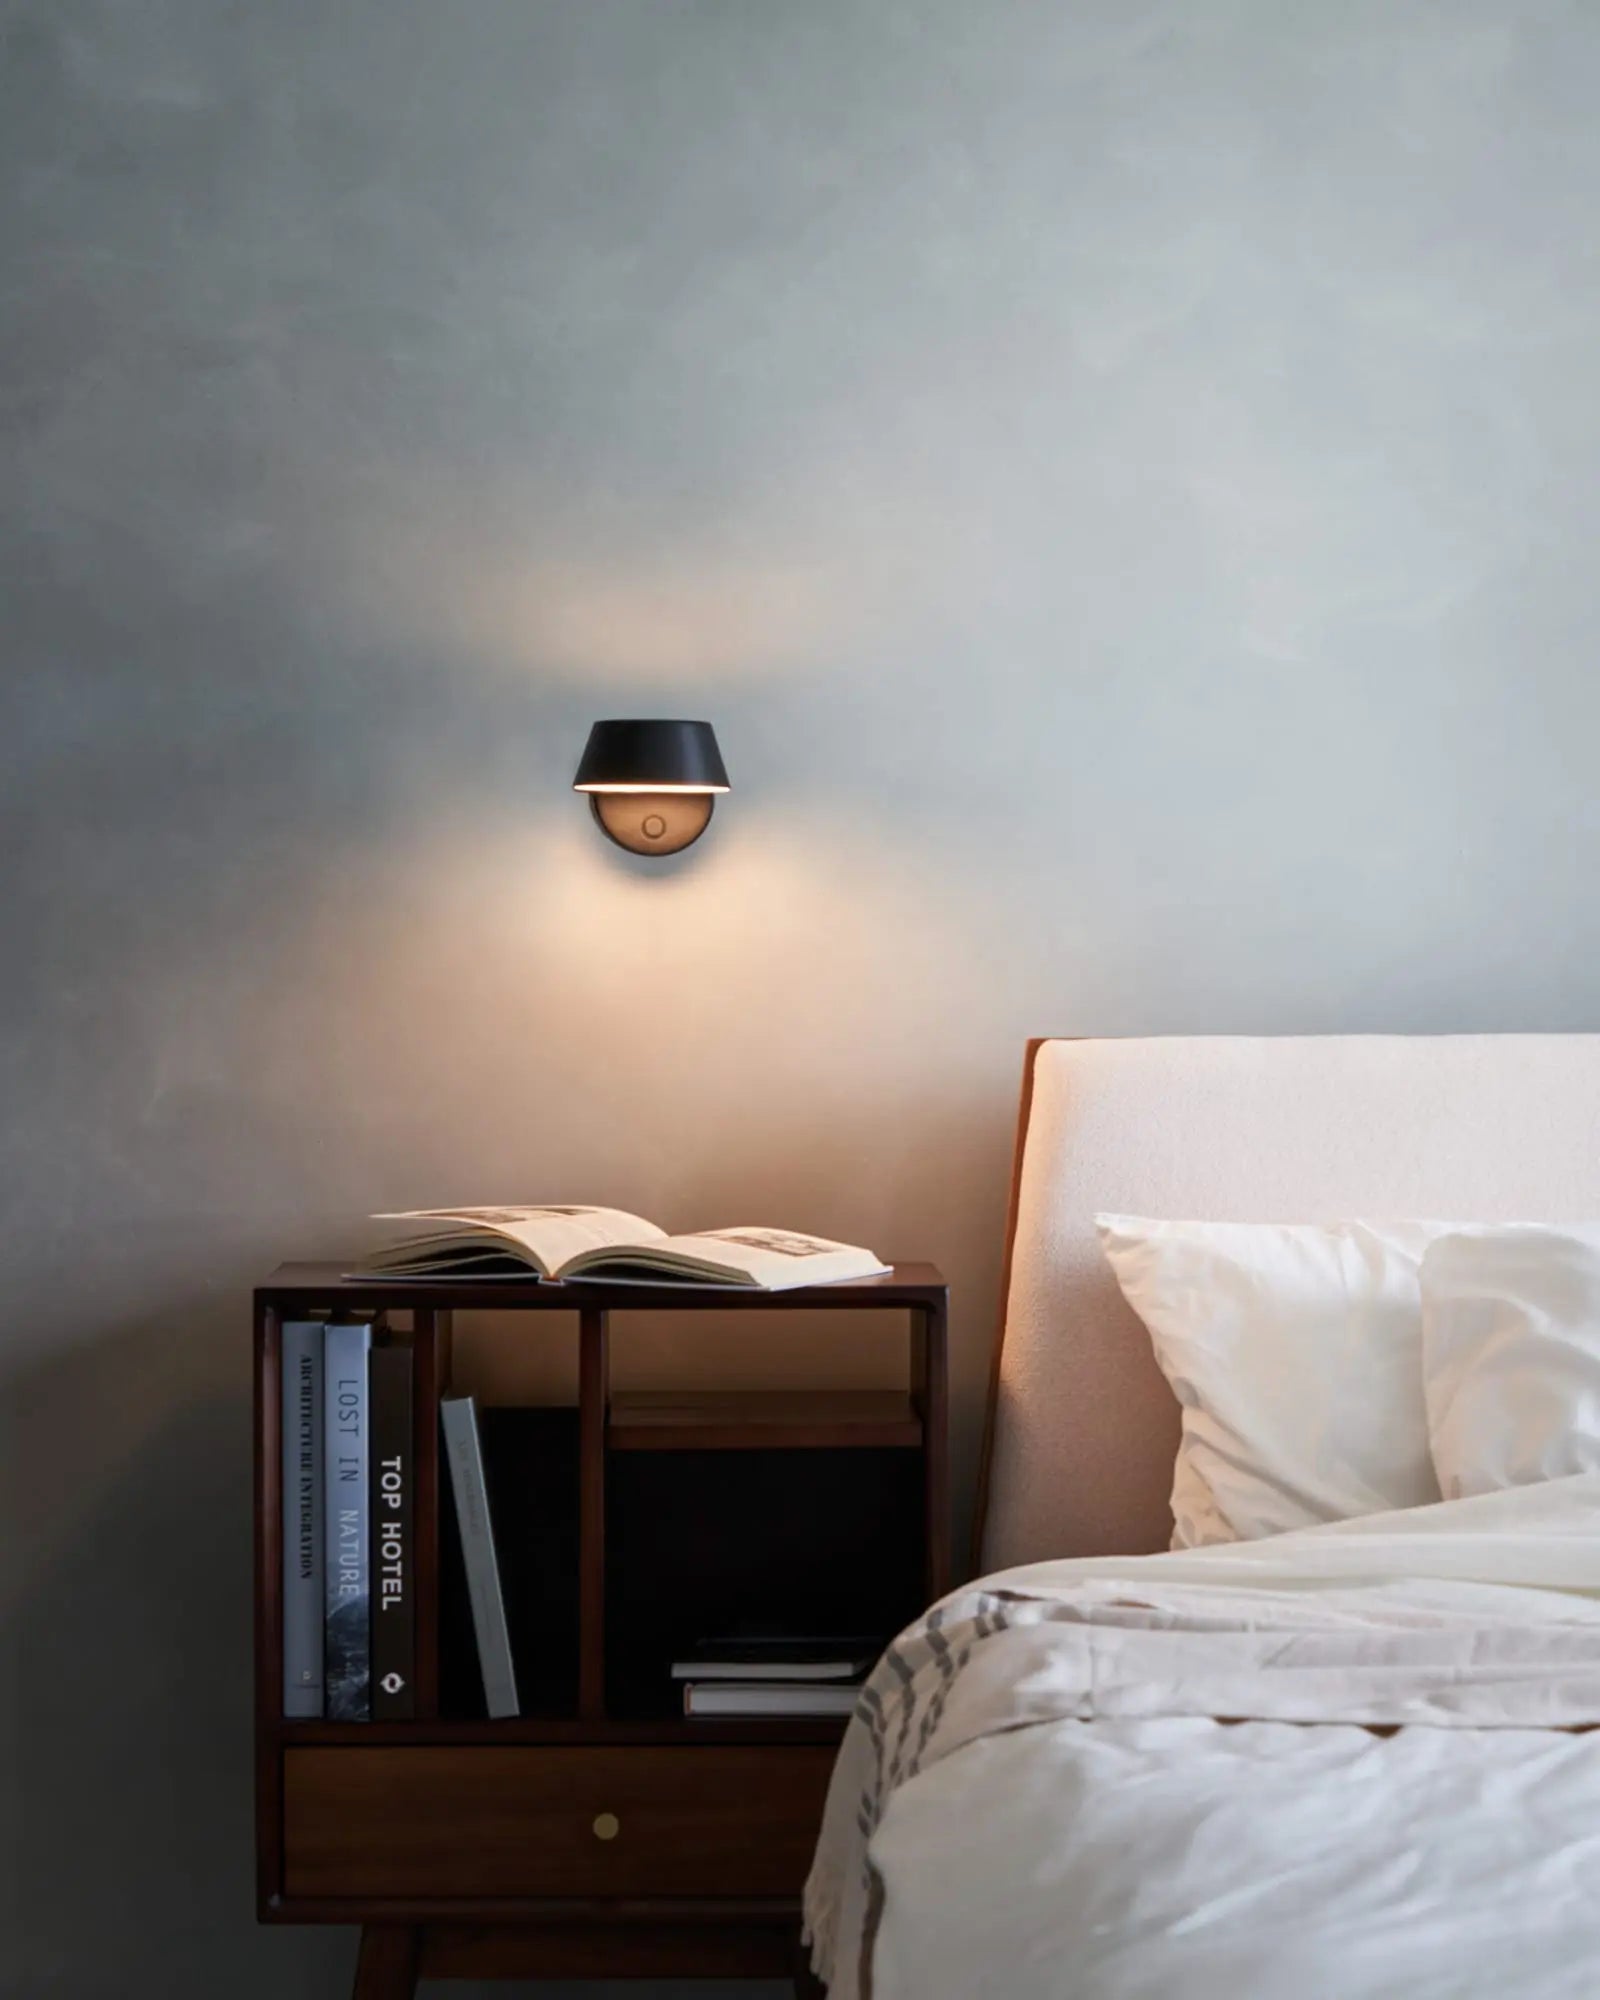 Olo Minimal wall light on the bedside